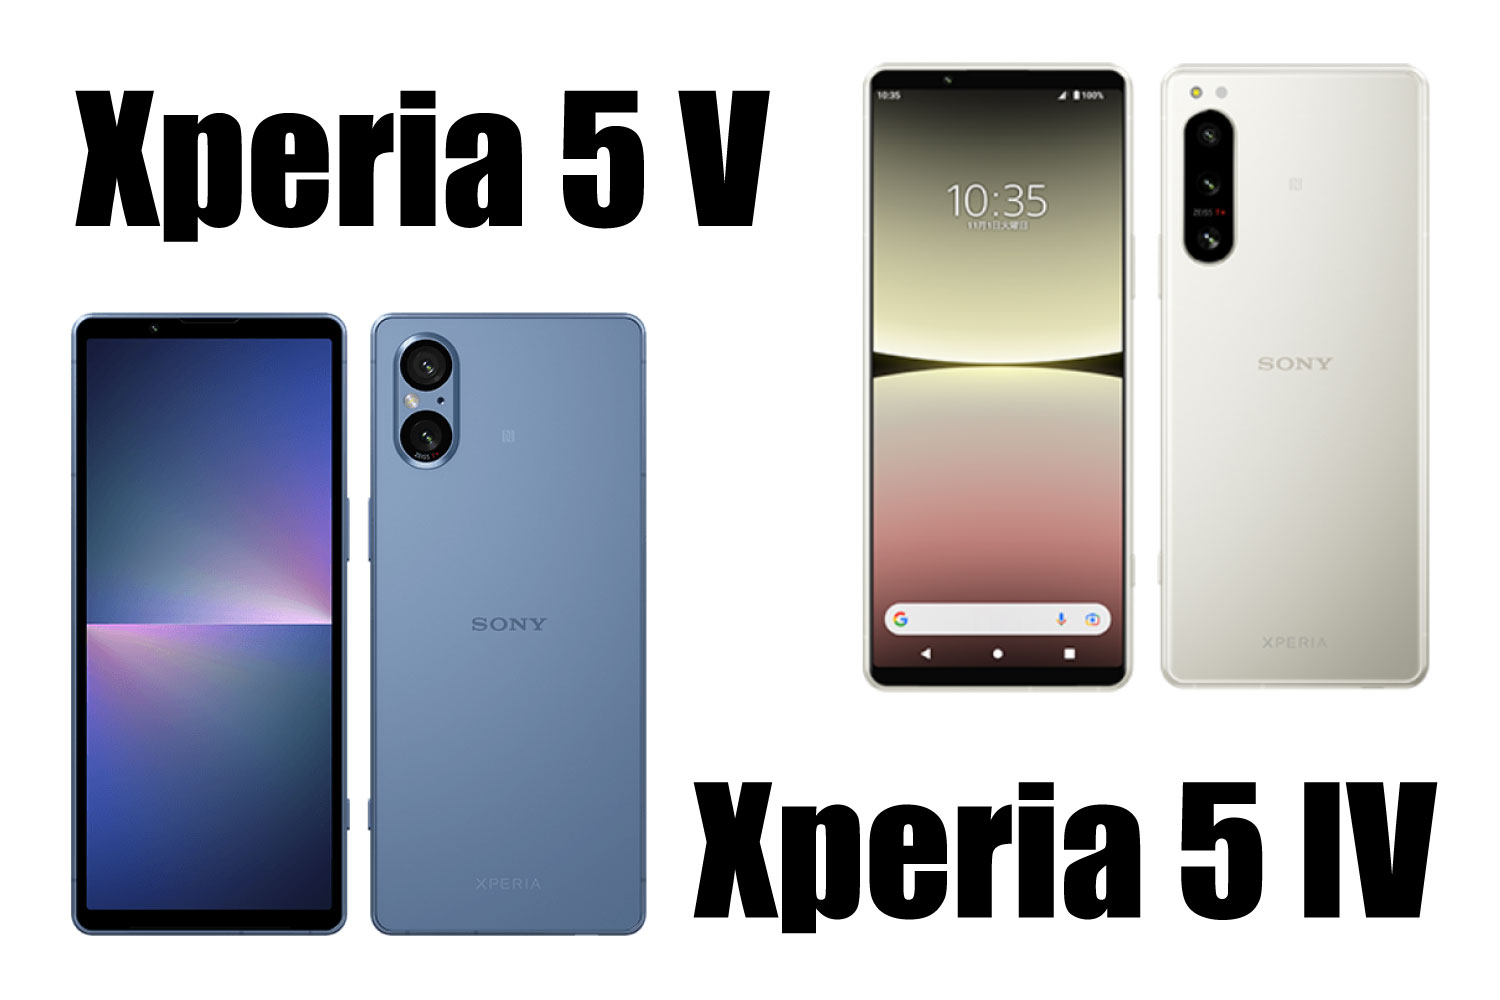 Xperia 5 V vs Xperia 5 IV